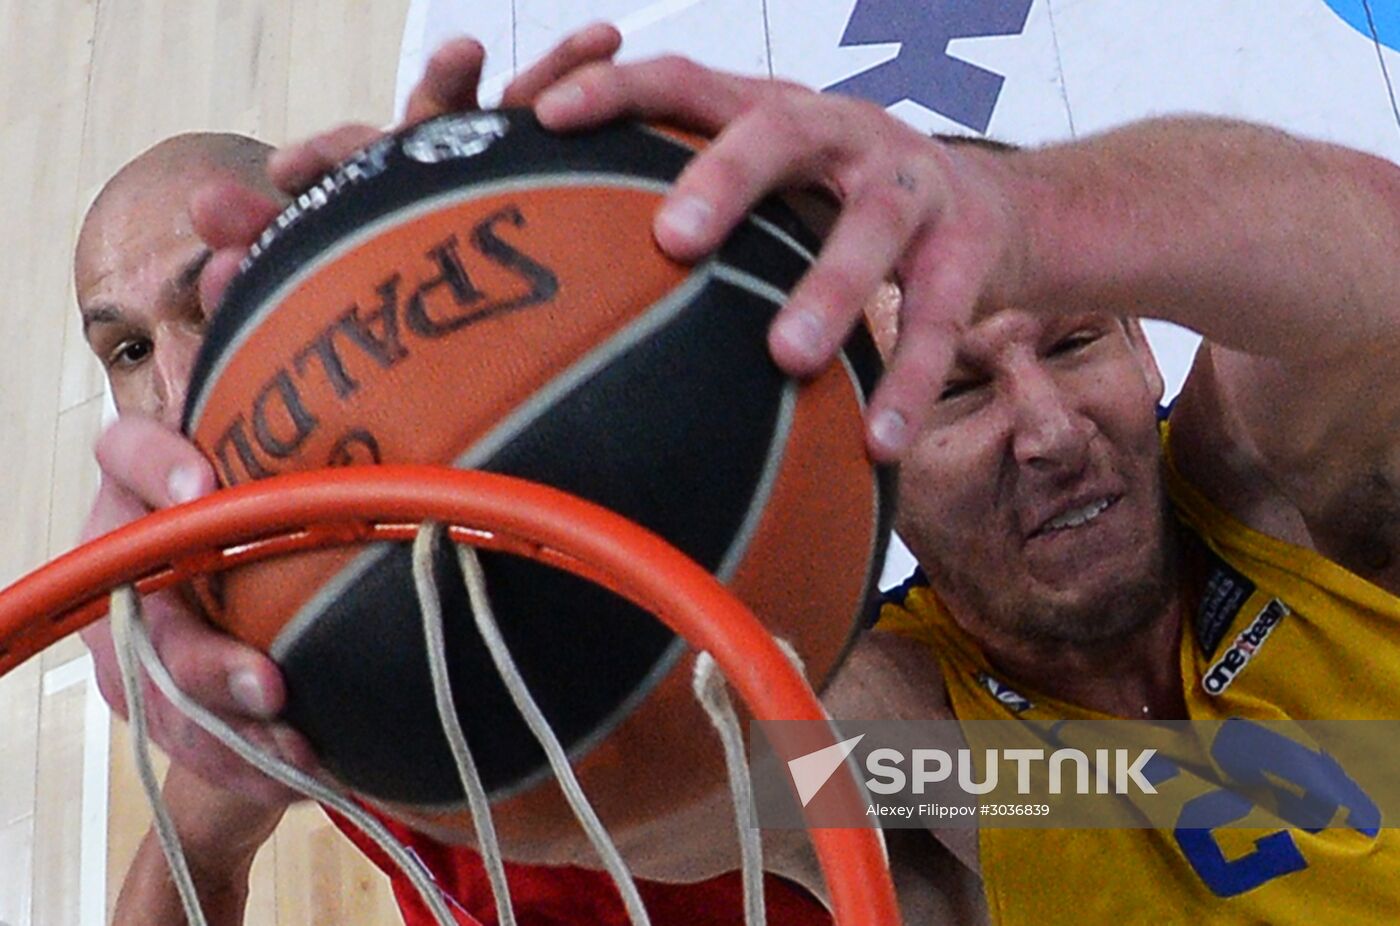 Euroleague Basketball. CSKA vs. Maccabi